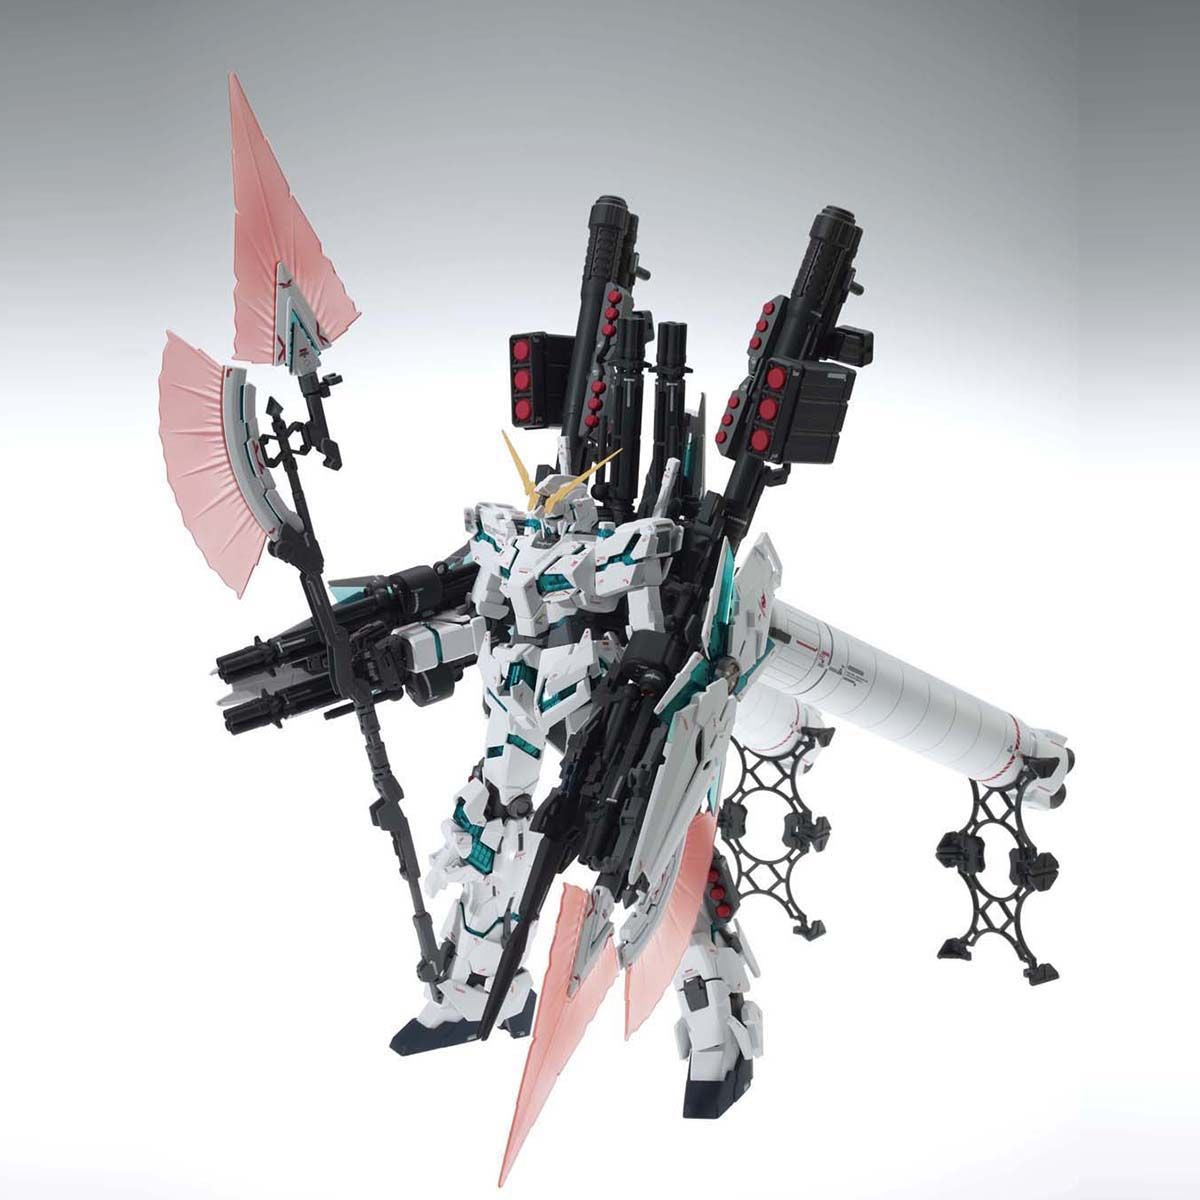 Bandai 1/100 MG RX-0 Full Armor Unicorn Gundam "Ver. Ka" Plastic Model Kit